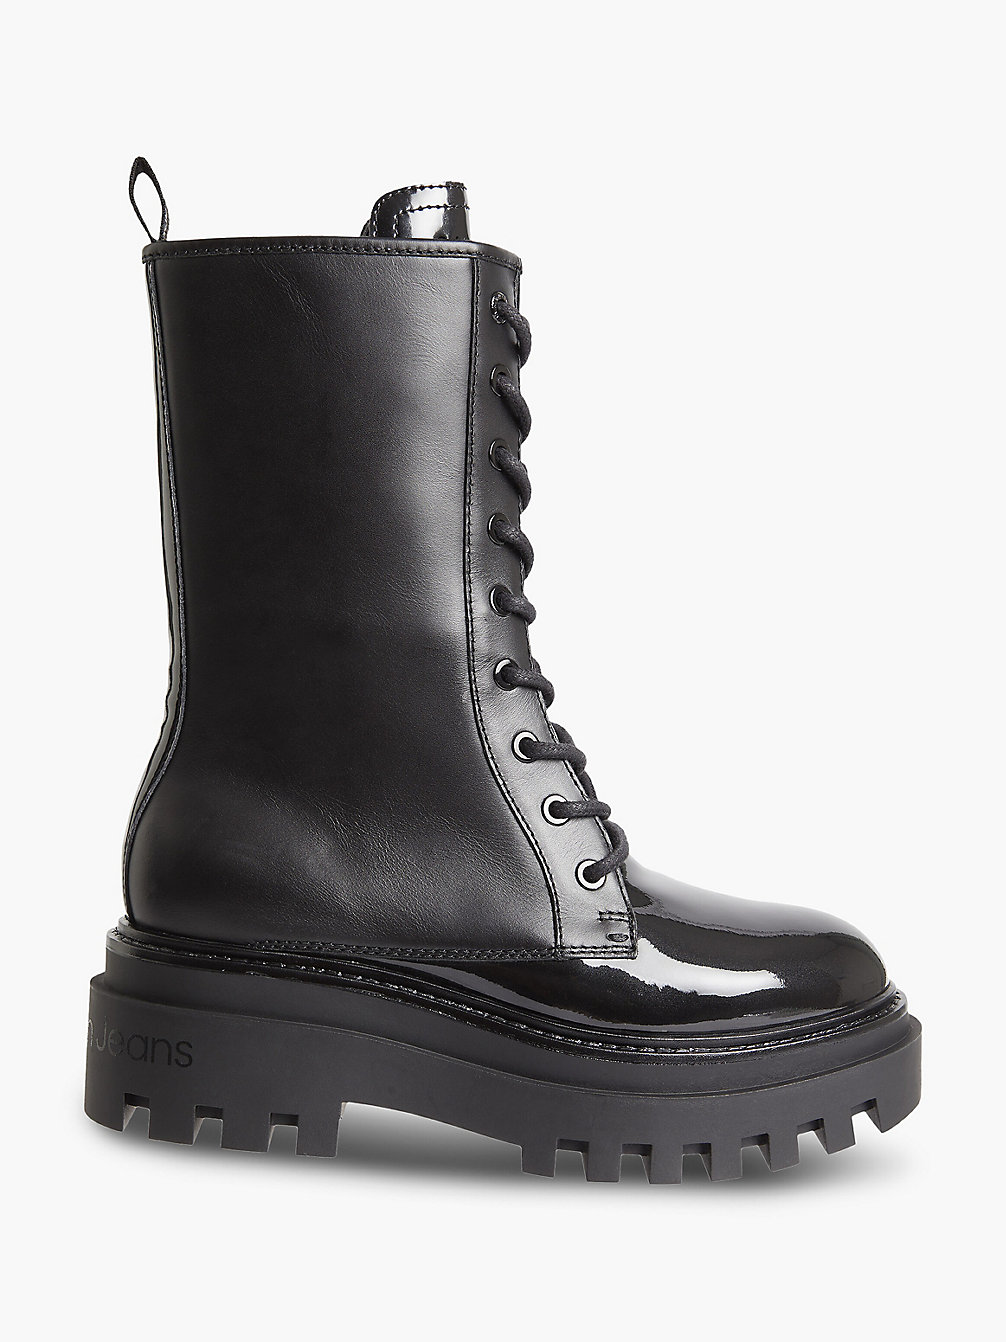 BLACK > Leder-Boots Mit Plateau-Sohle > undefined Damen - Calvin Klein